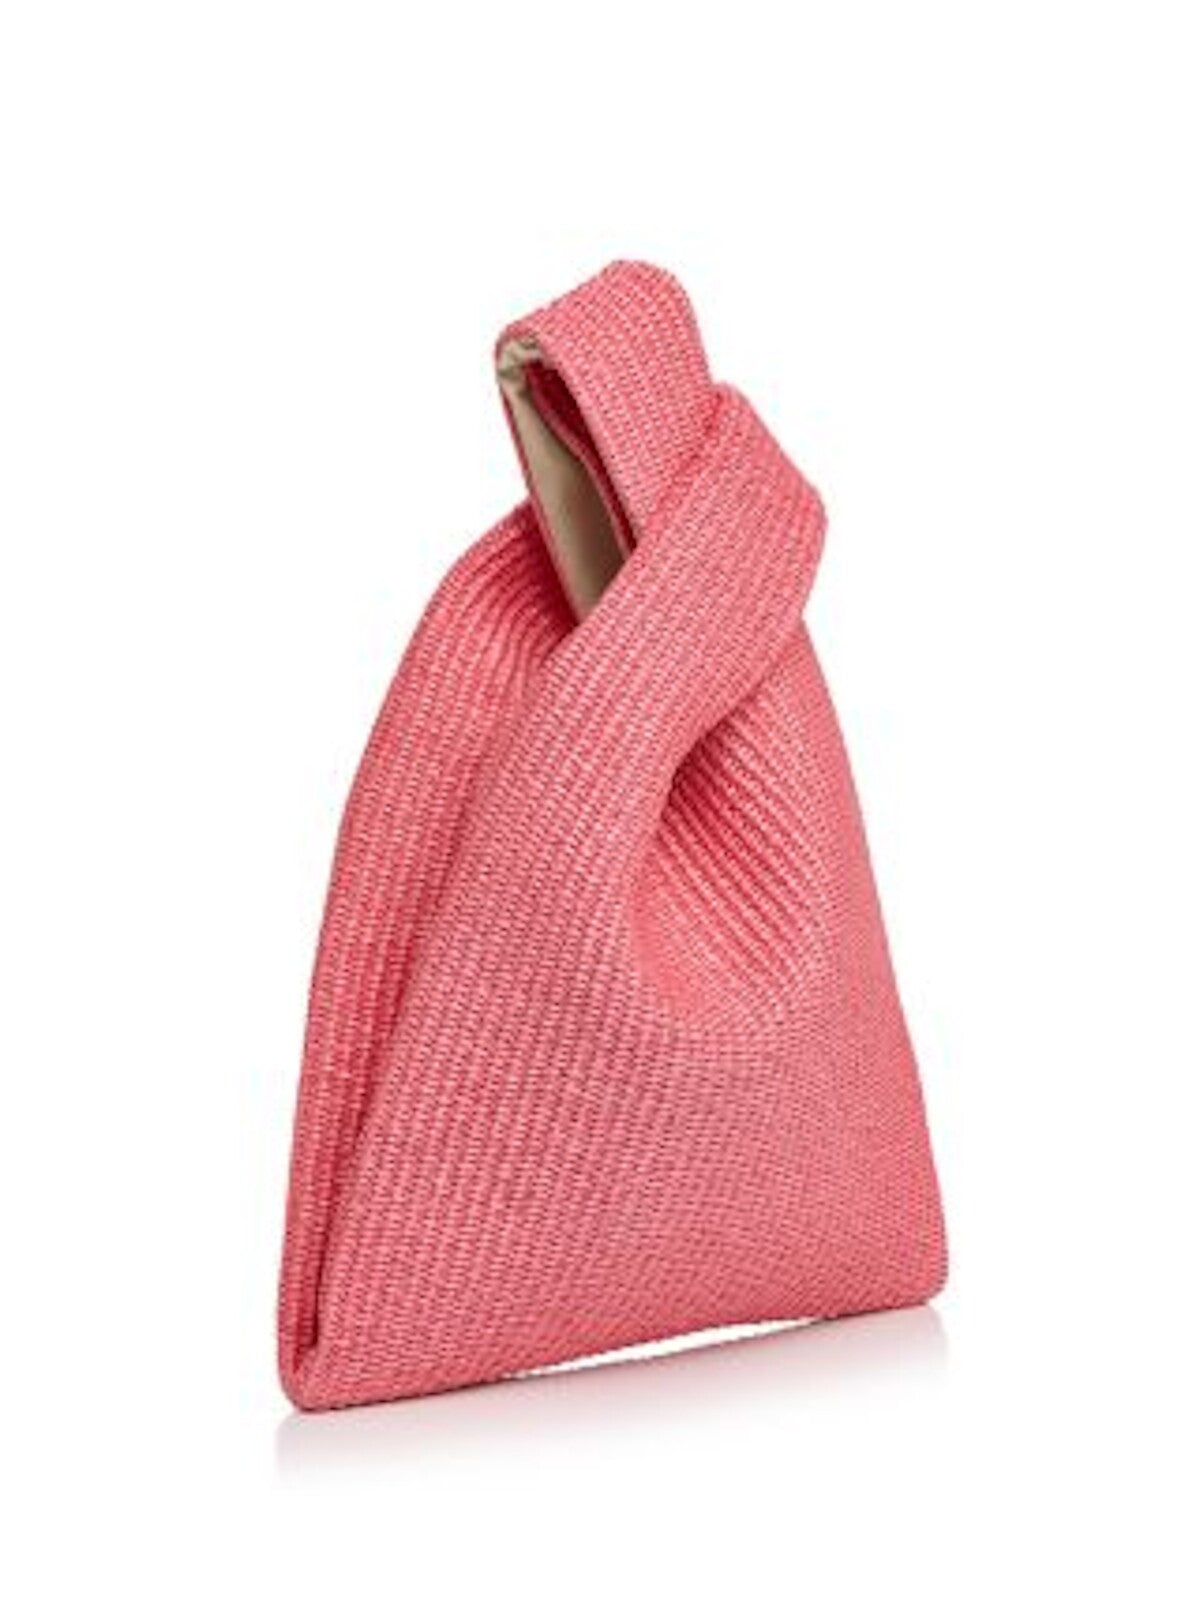 Arron Women's Pink Crochet Double Flat Strap Handbag Purse